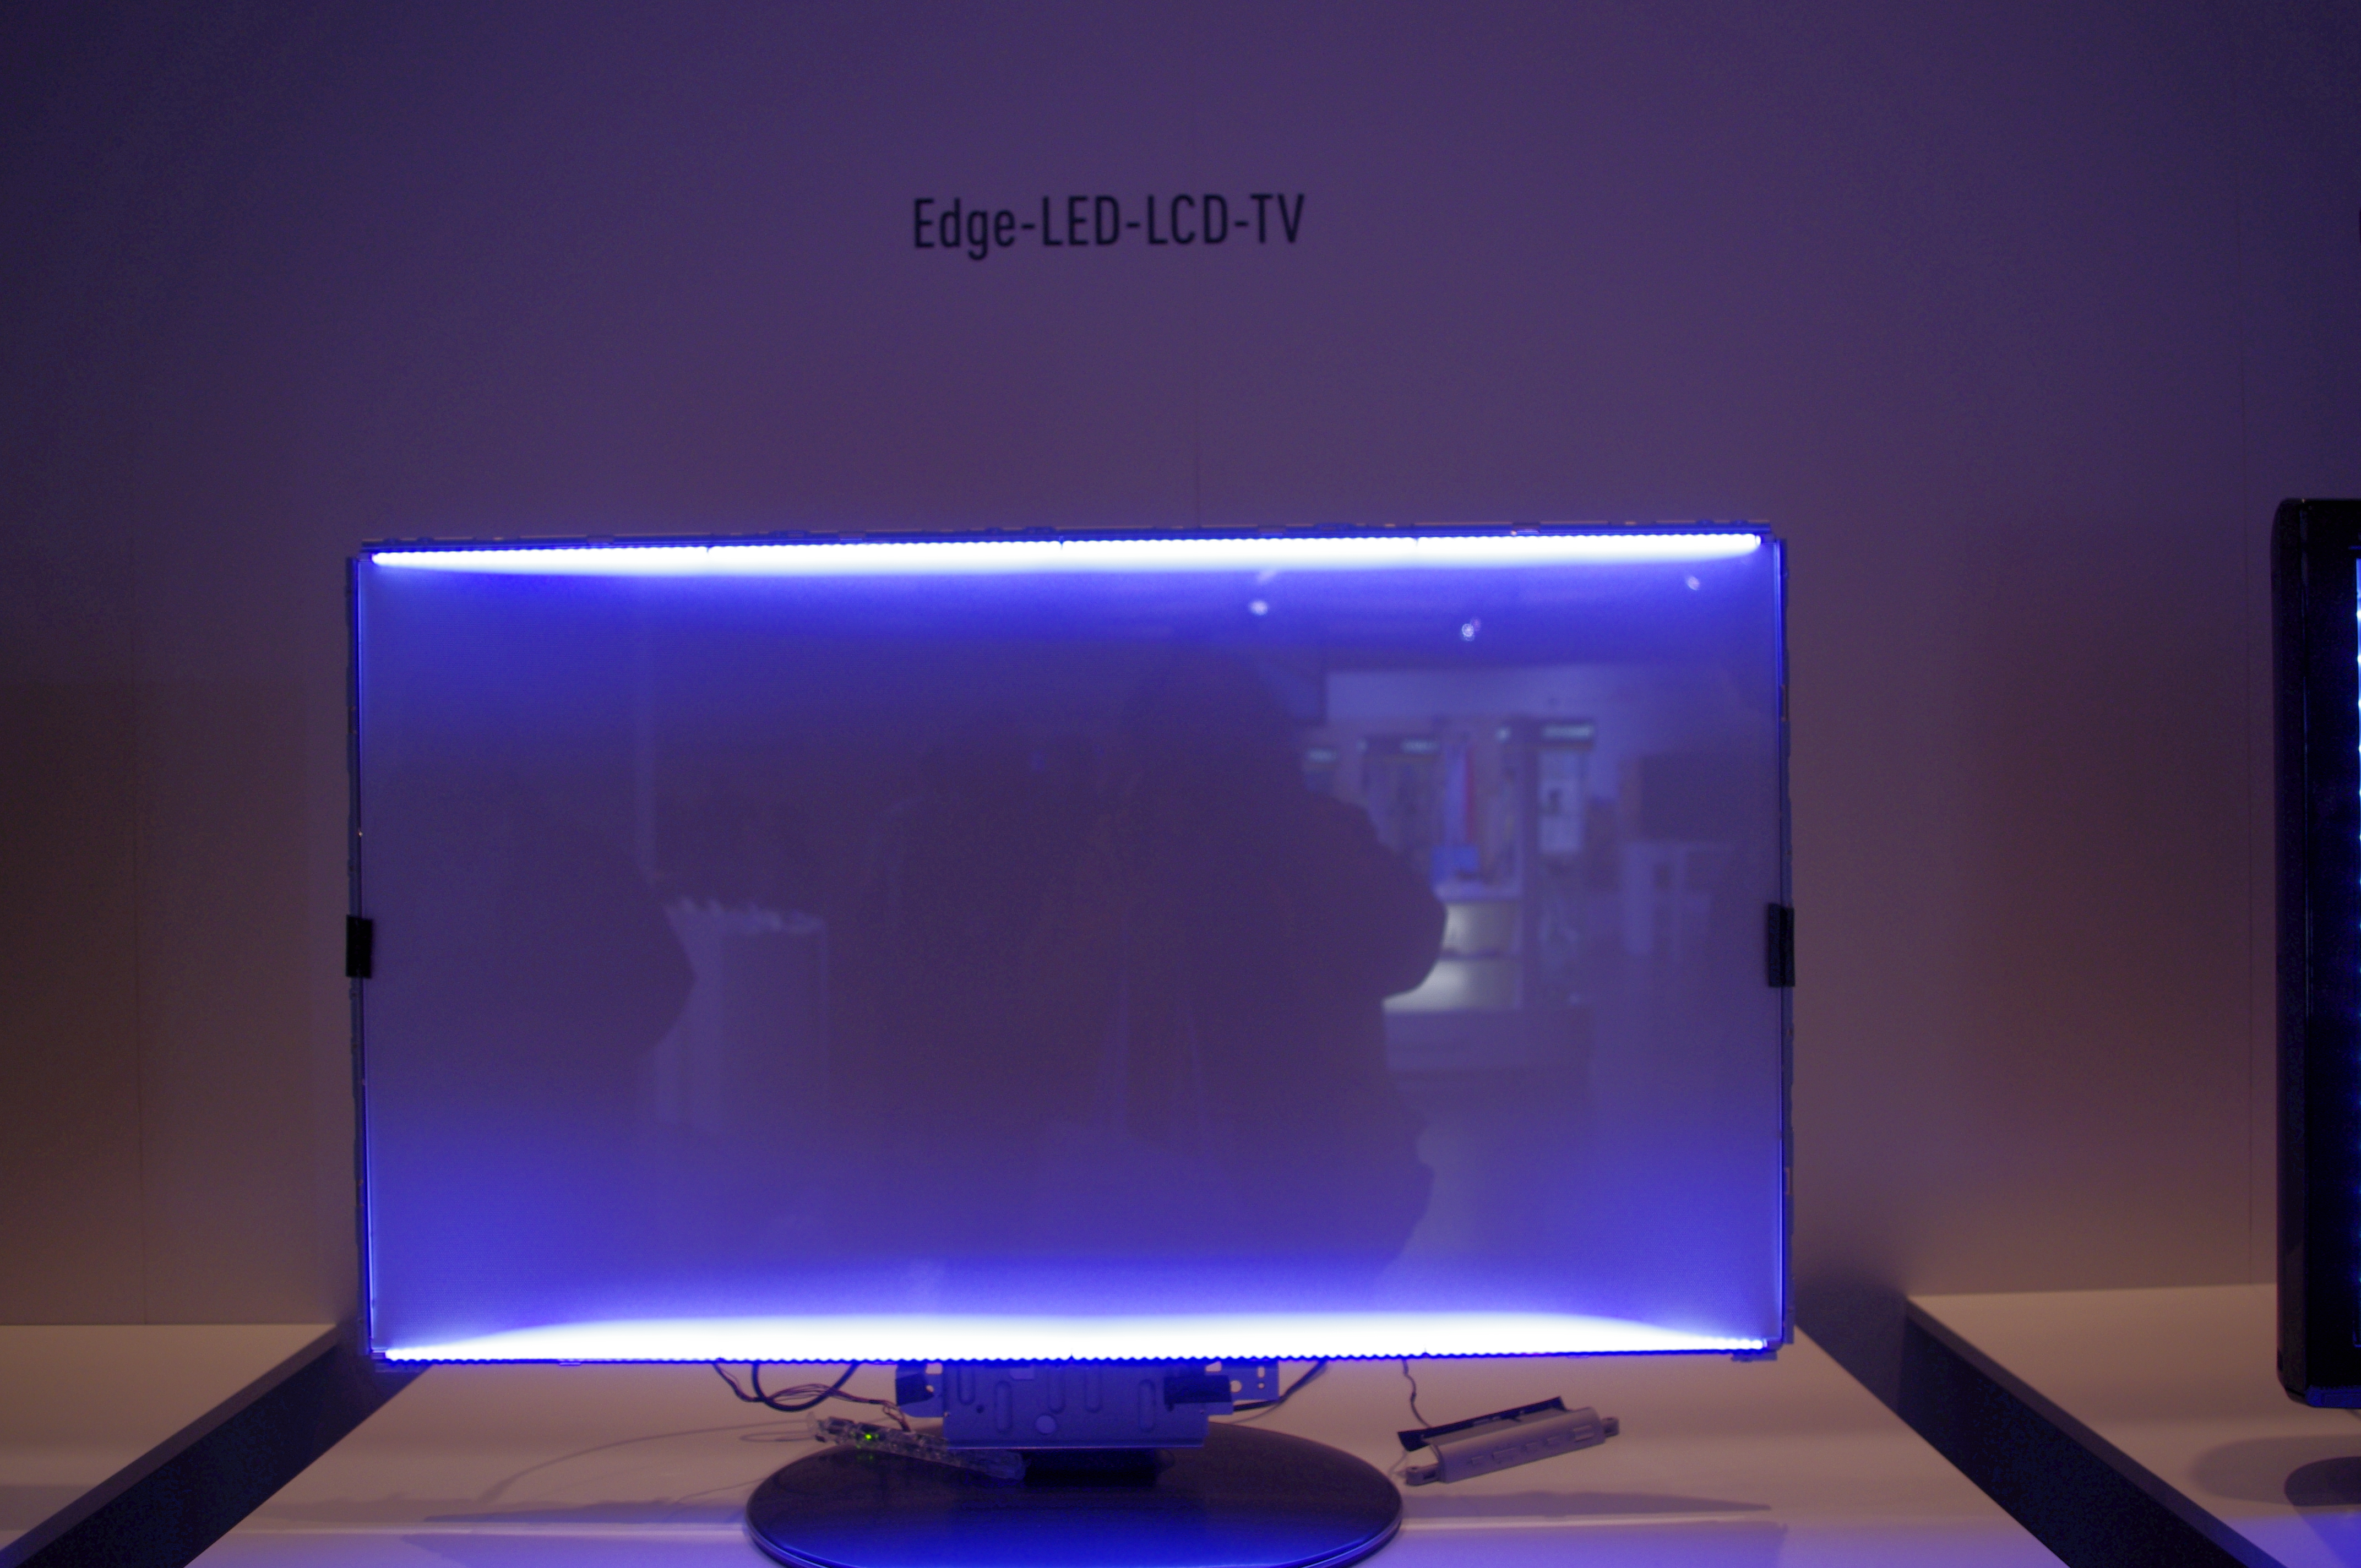 Телевизор без подсветки. Edge led подсветка Samsung. Подсветка Edge led что это такое в телевизоре. Тип светодиодной подсветки: Edge led. Подсветка direct led что это такое в телевизоре.